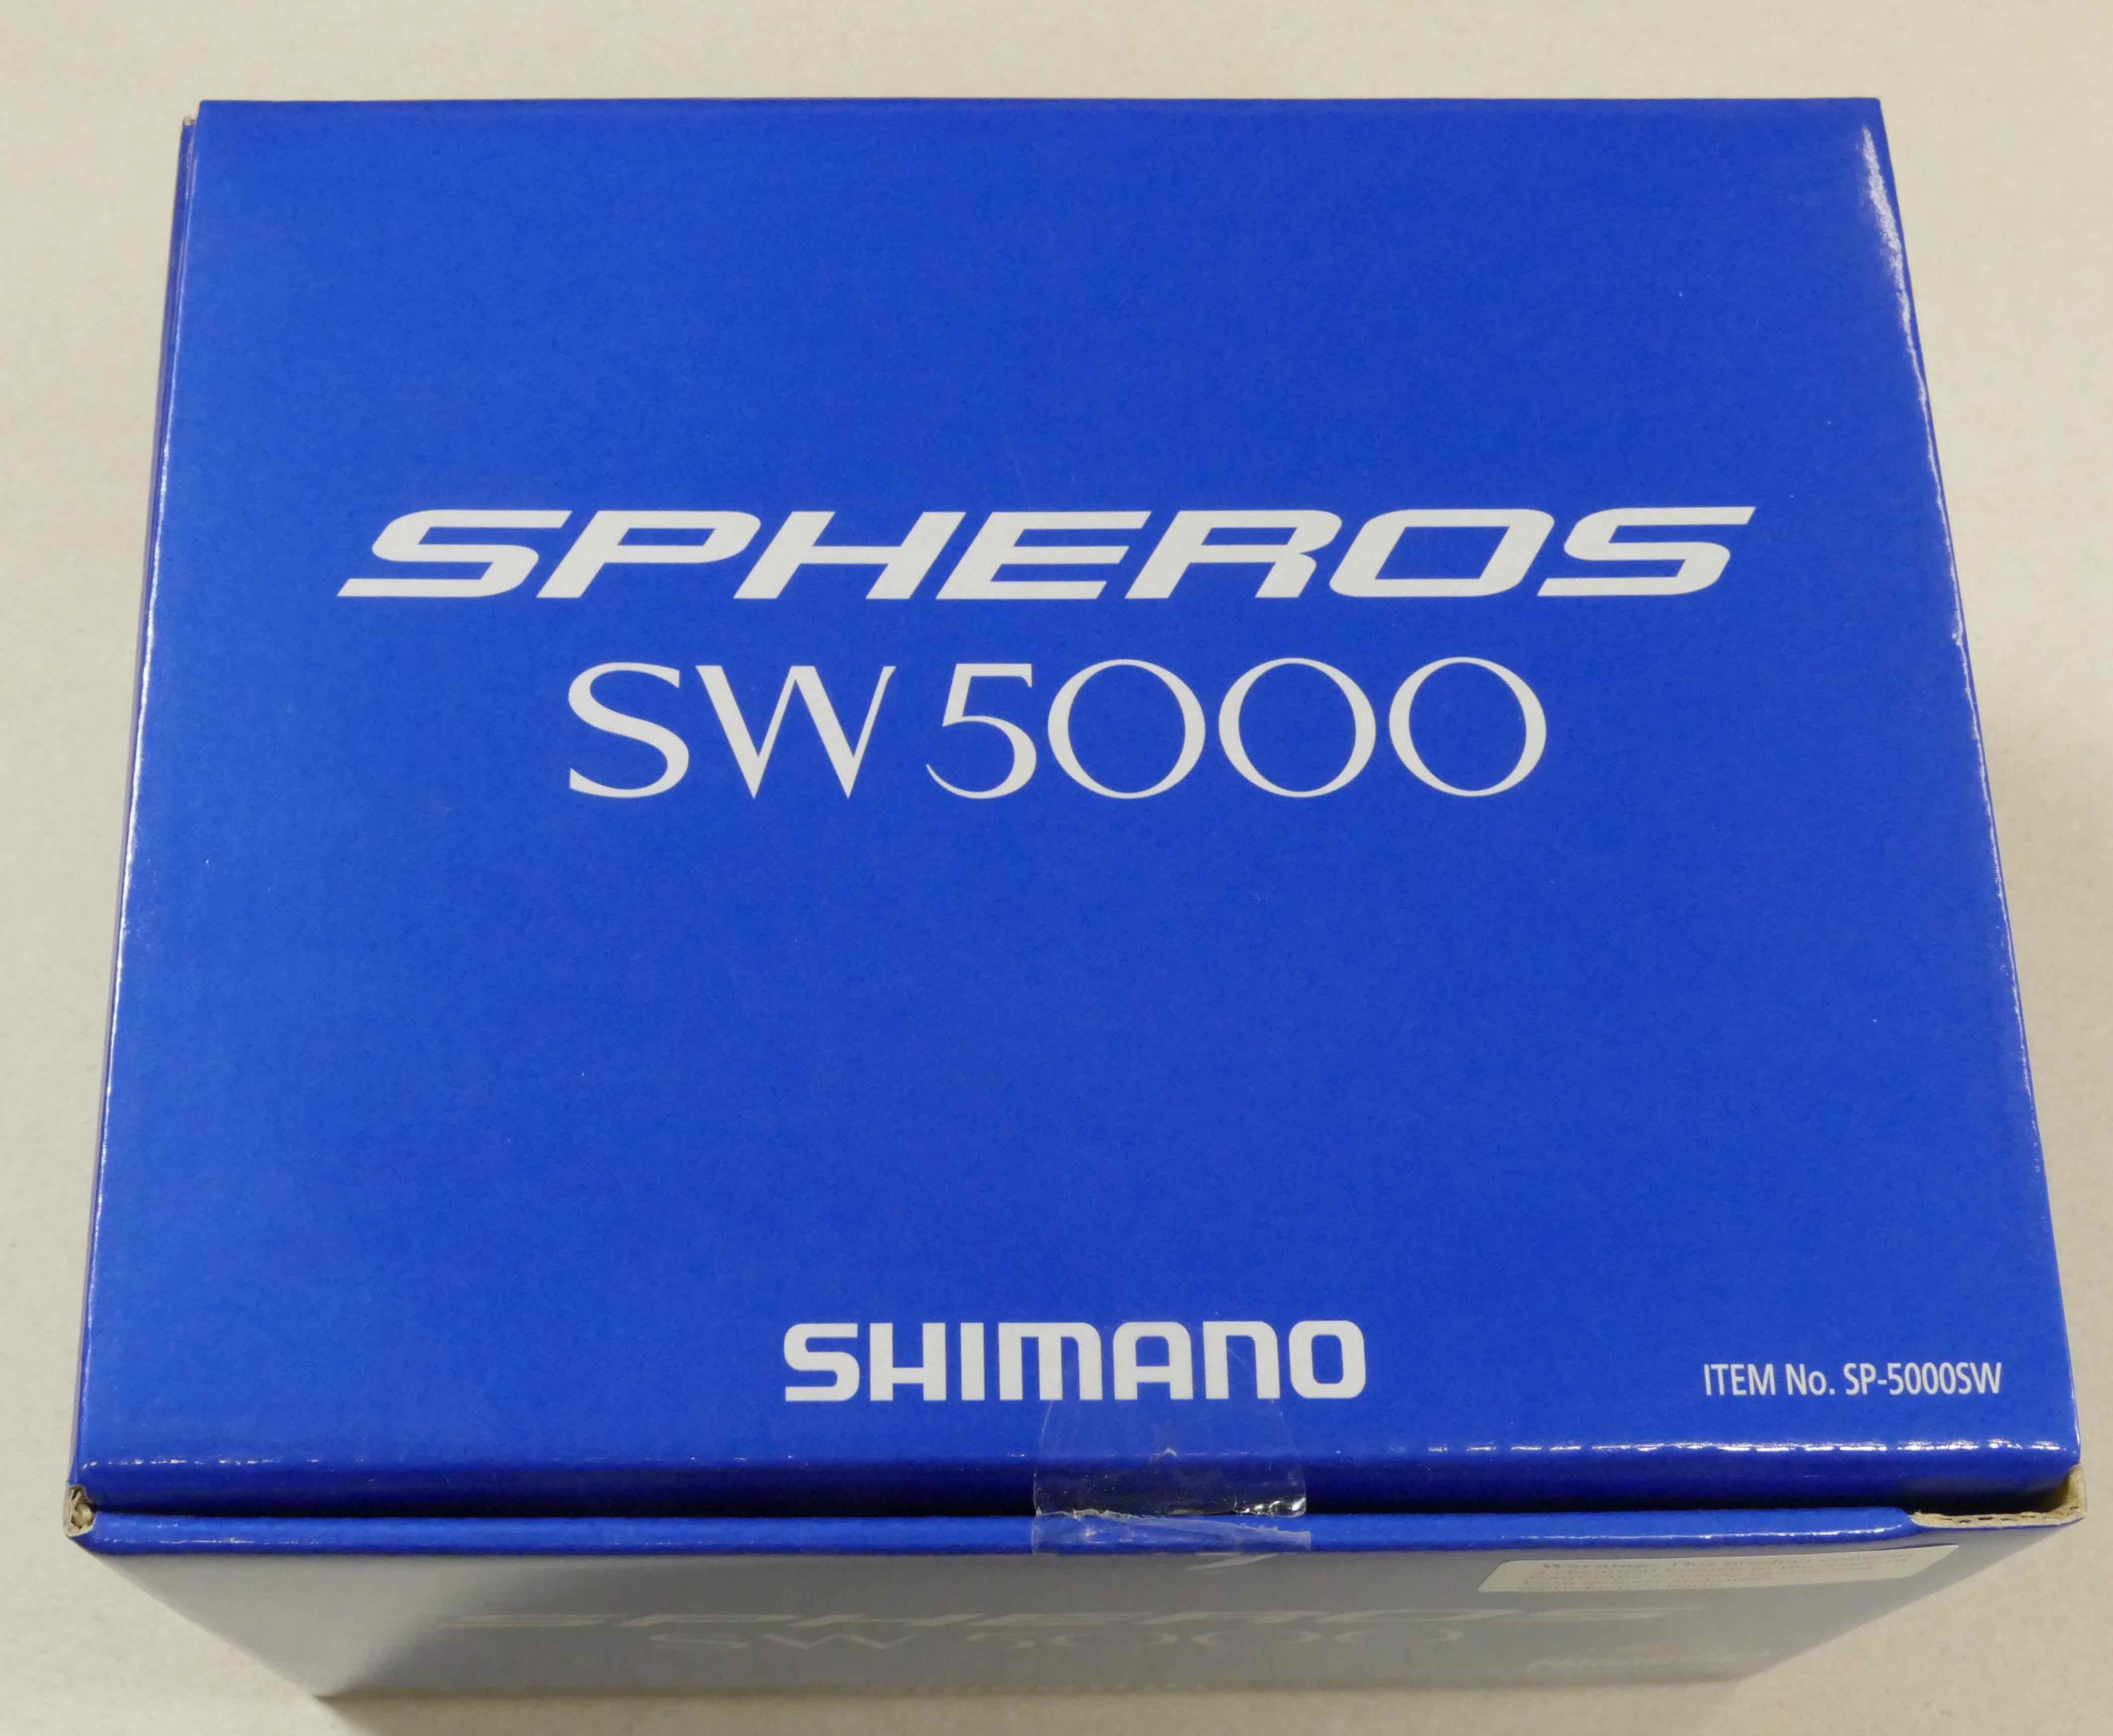 https://thefirstcast.ca/wp-content/uploads/2018/12/Shimano-Spheros-SW5000-Salt-Water-Spinning-Reel-spheros5000-1A.jpg